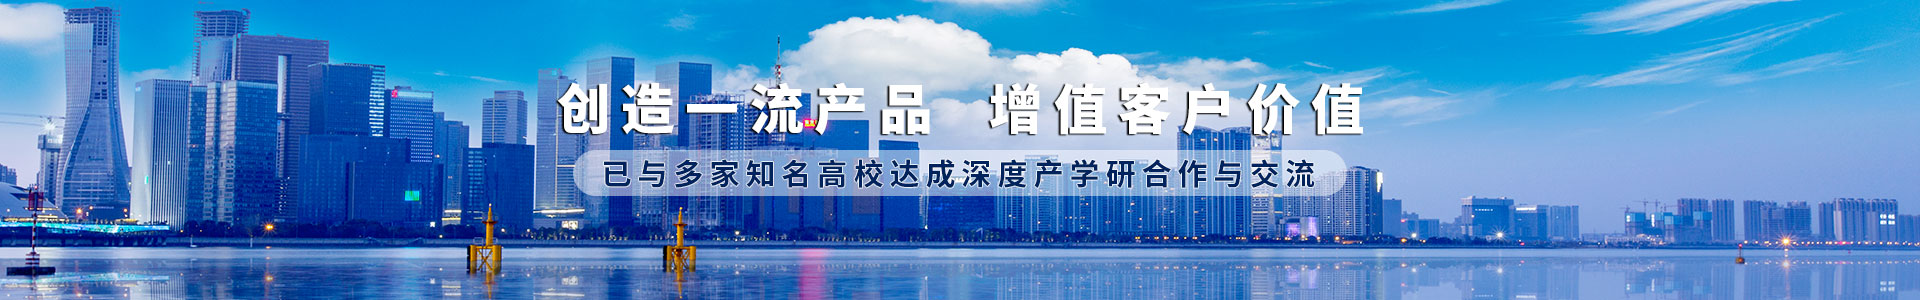 BB电子·(china)官方网站_项目5861